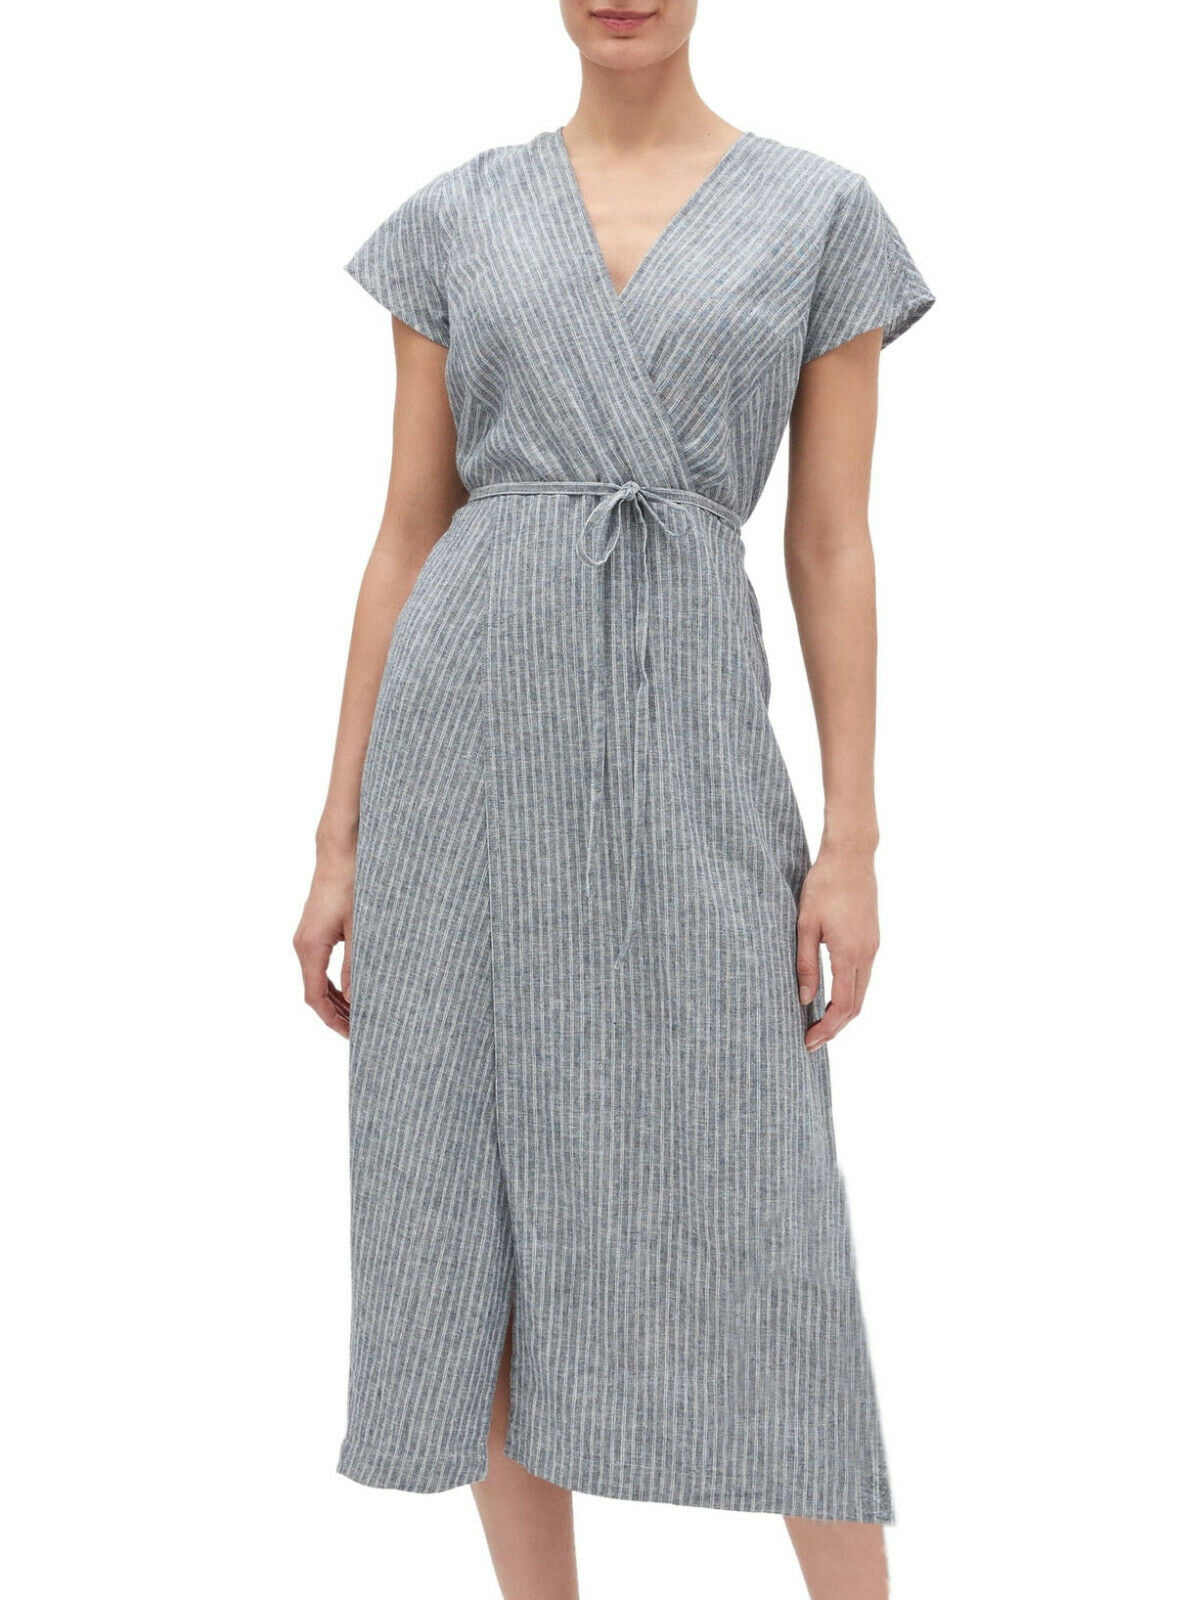 by Grape kaldenavn New Banana Republic Womens Blue & White Striped Linen Patio Wrap Dress Sz 6  2668-3 - Walmart.com